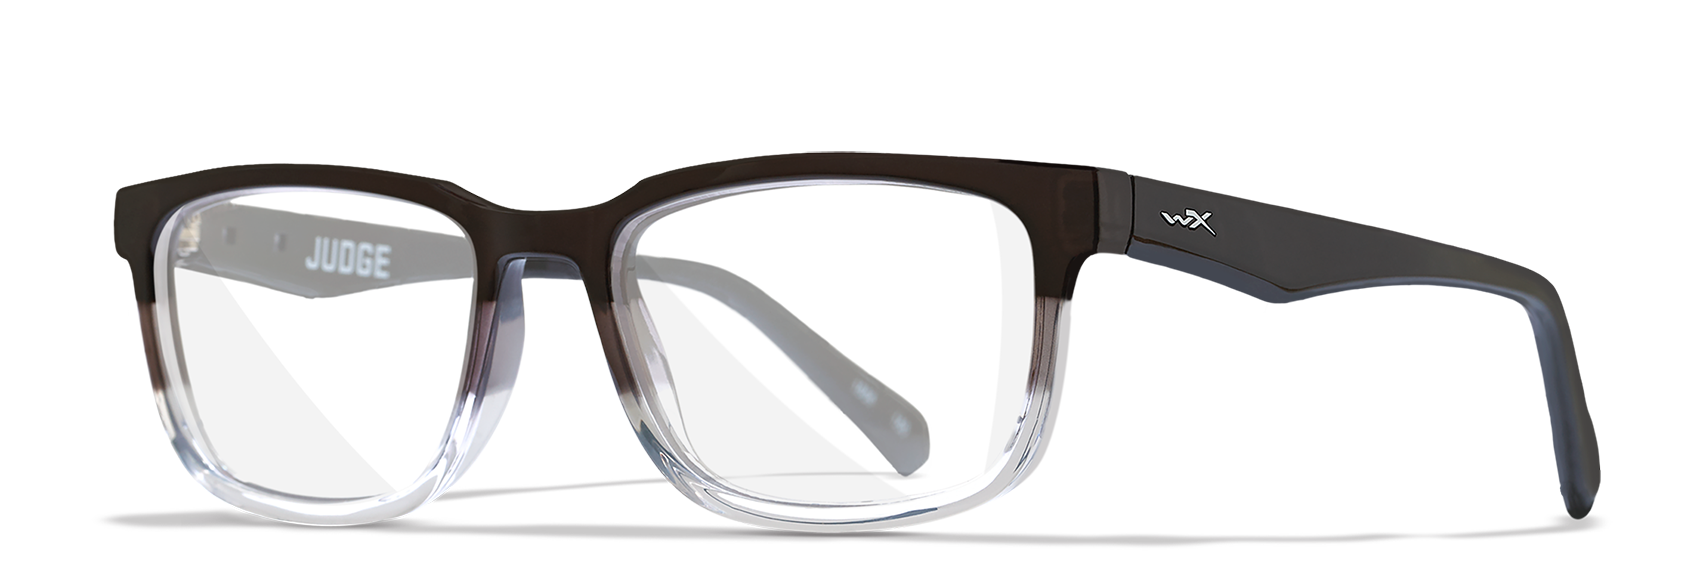 Wiley X WX JUDGE Full Rim Eyeglasses  Gloss Black / Clear Fade 55-18-150